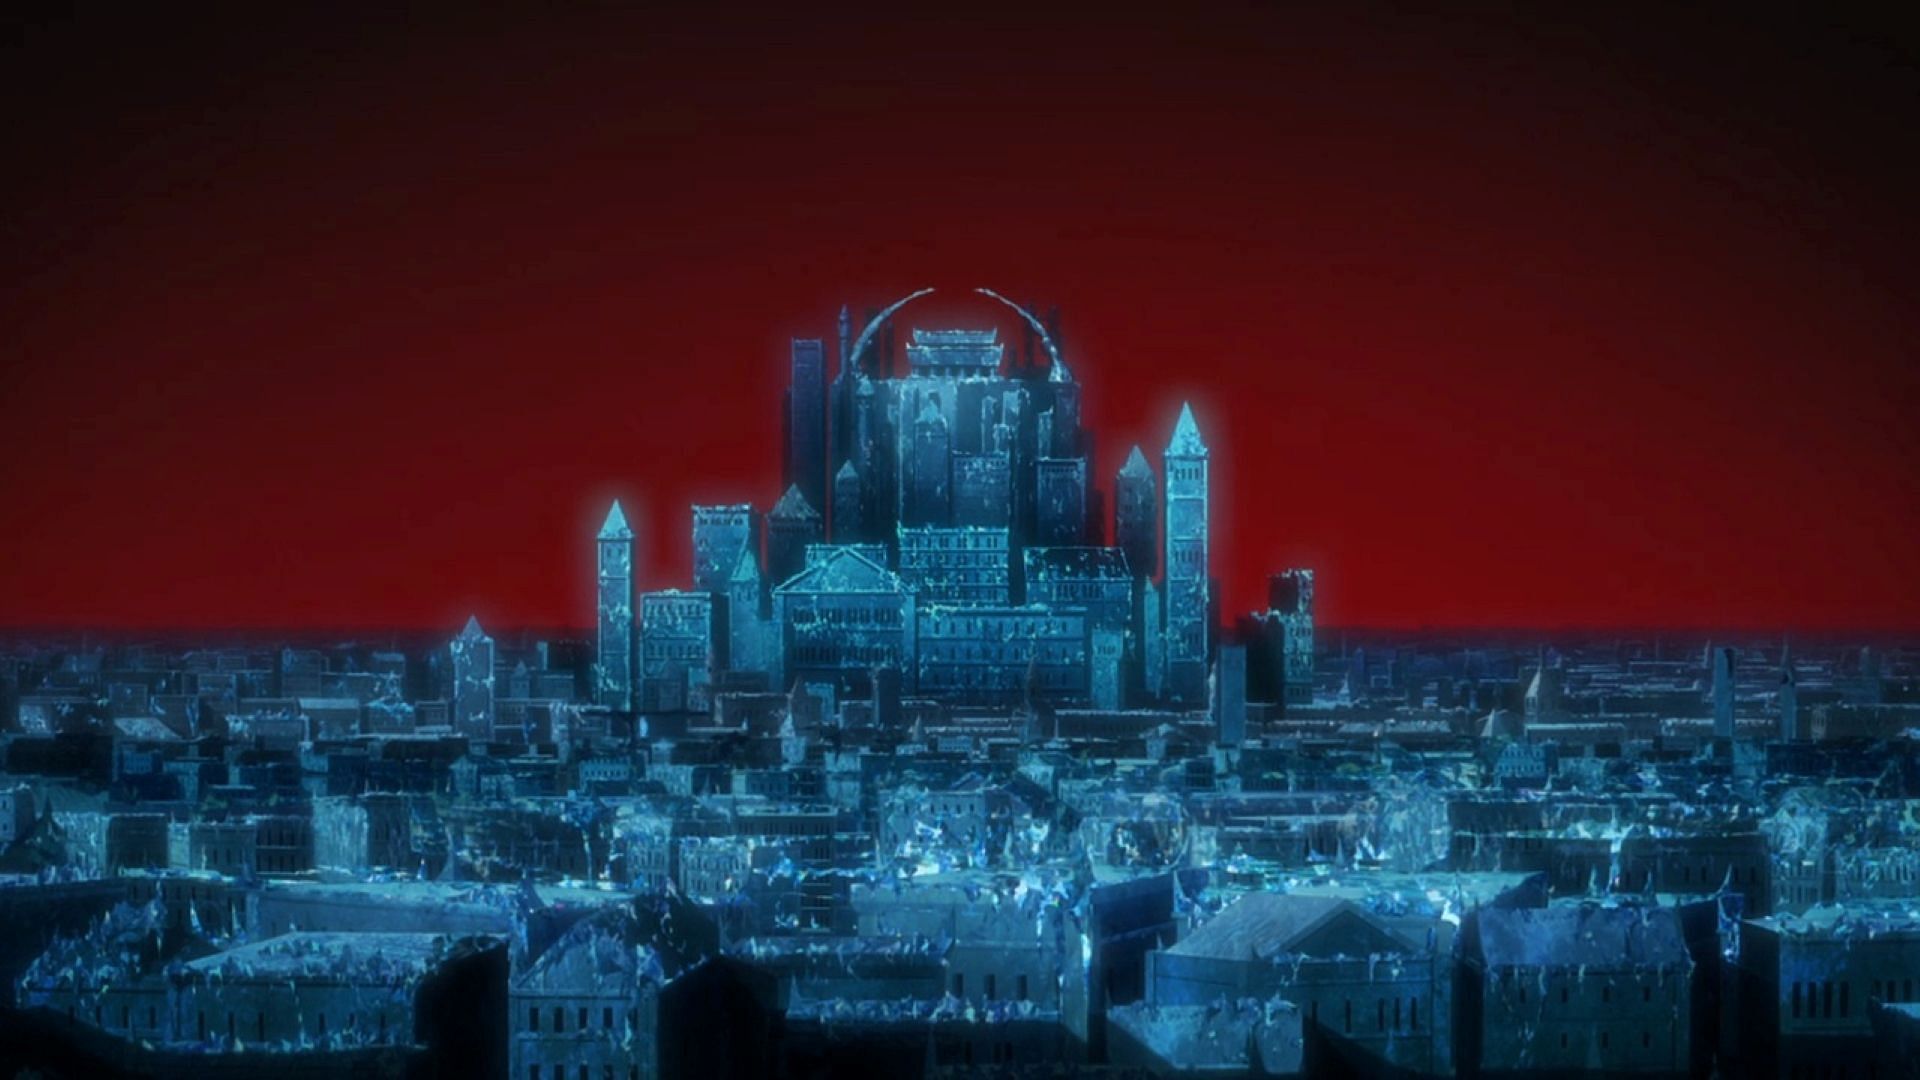 Bleach: Thousand-Year Blood War Anime Brings in Yoh Kamiyama for 2nd Part's  Ending Theme - Crunchyroll News